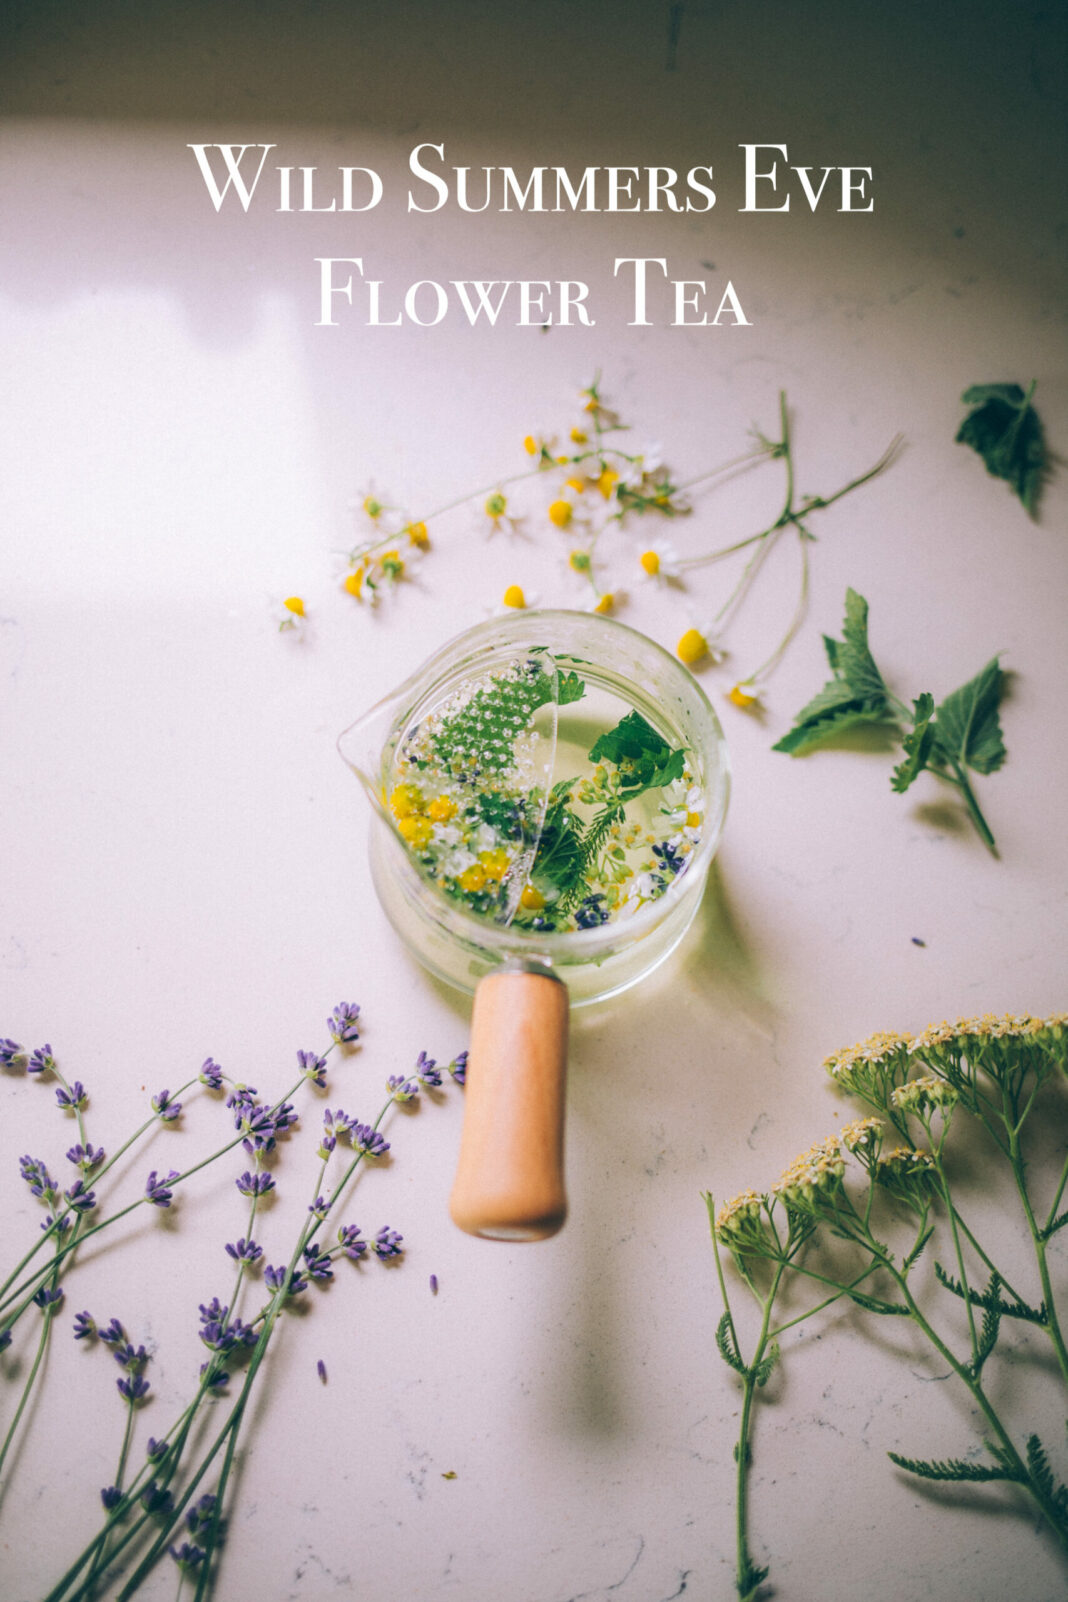 Wild Summers Eve Flower Tea